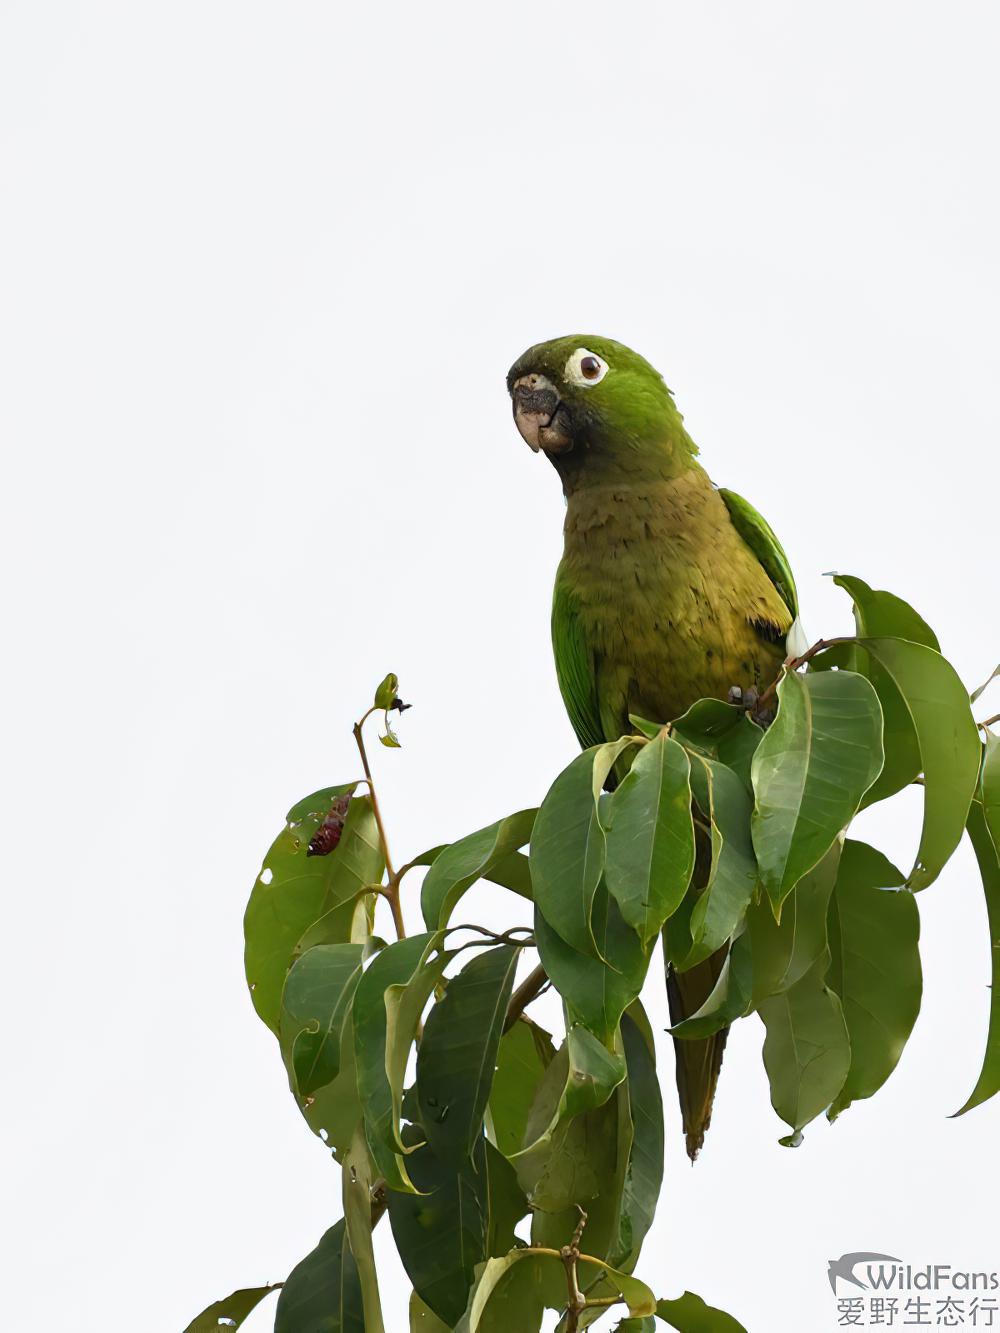 绿喉鹦哥 / Olive-throated Parakeet / Eupsittula nana